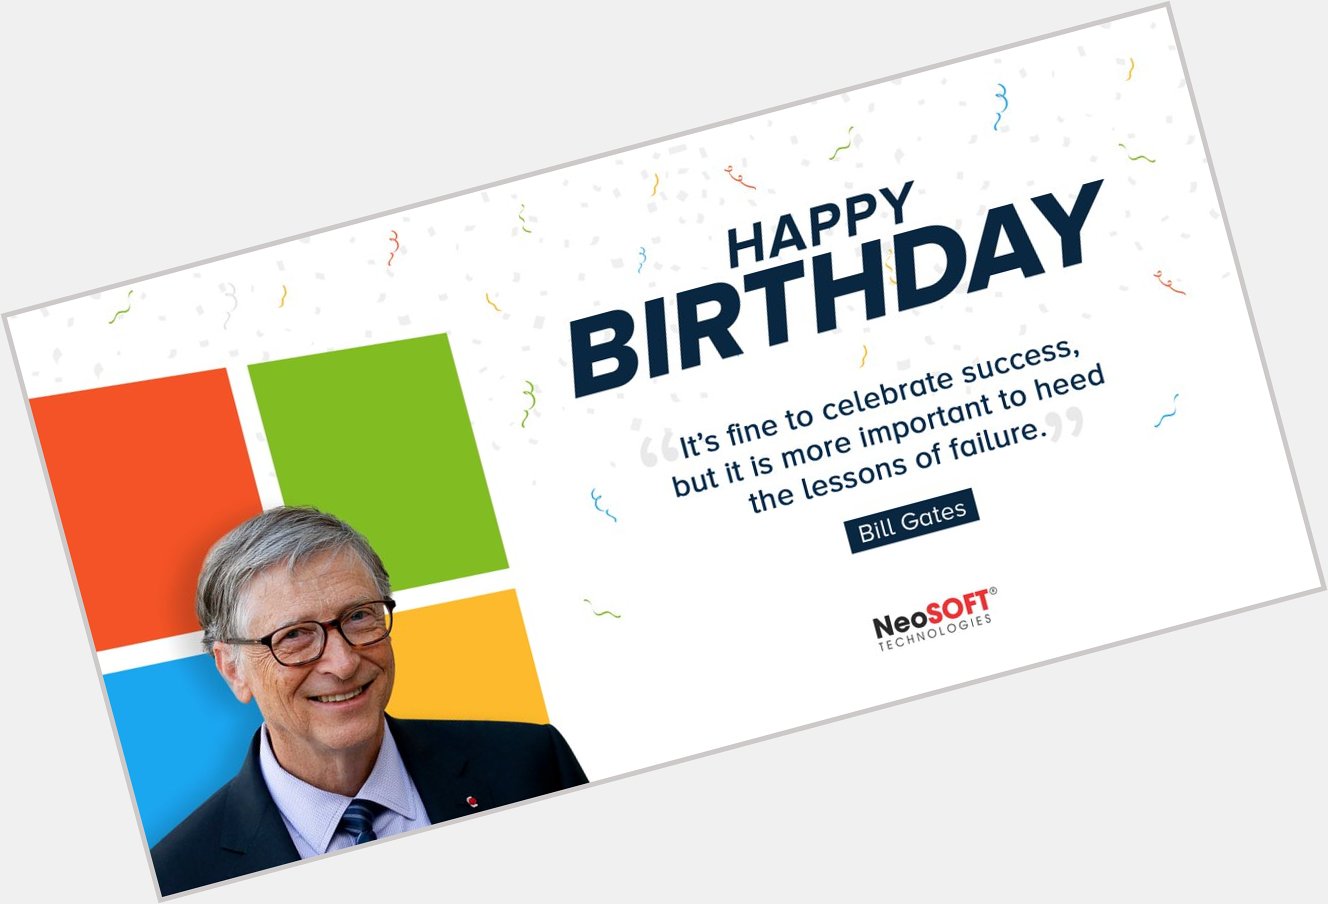 NeoSOFT heartily wishes Bill Gates a very happy birthday.   